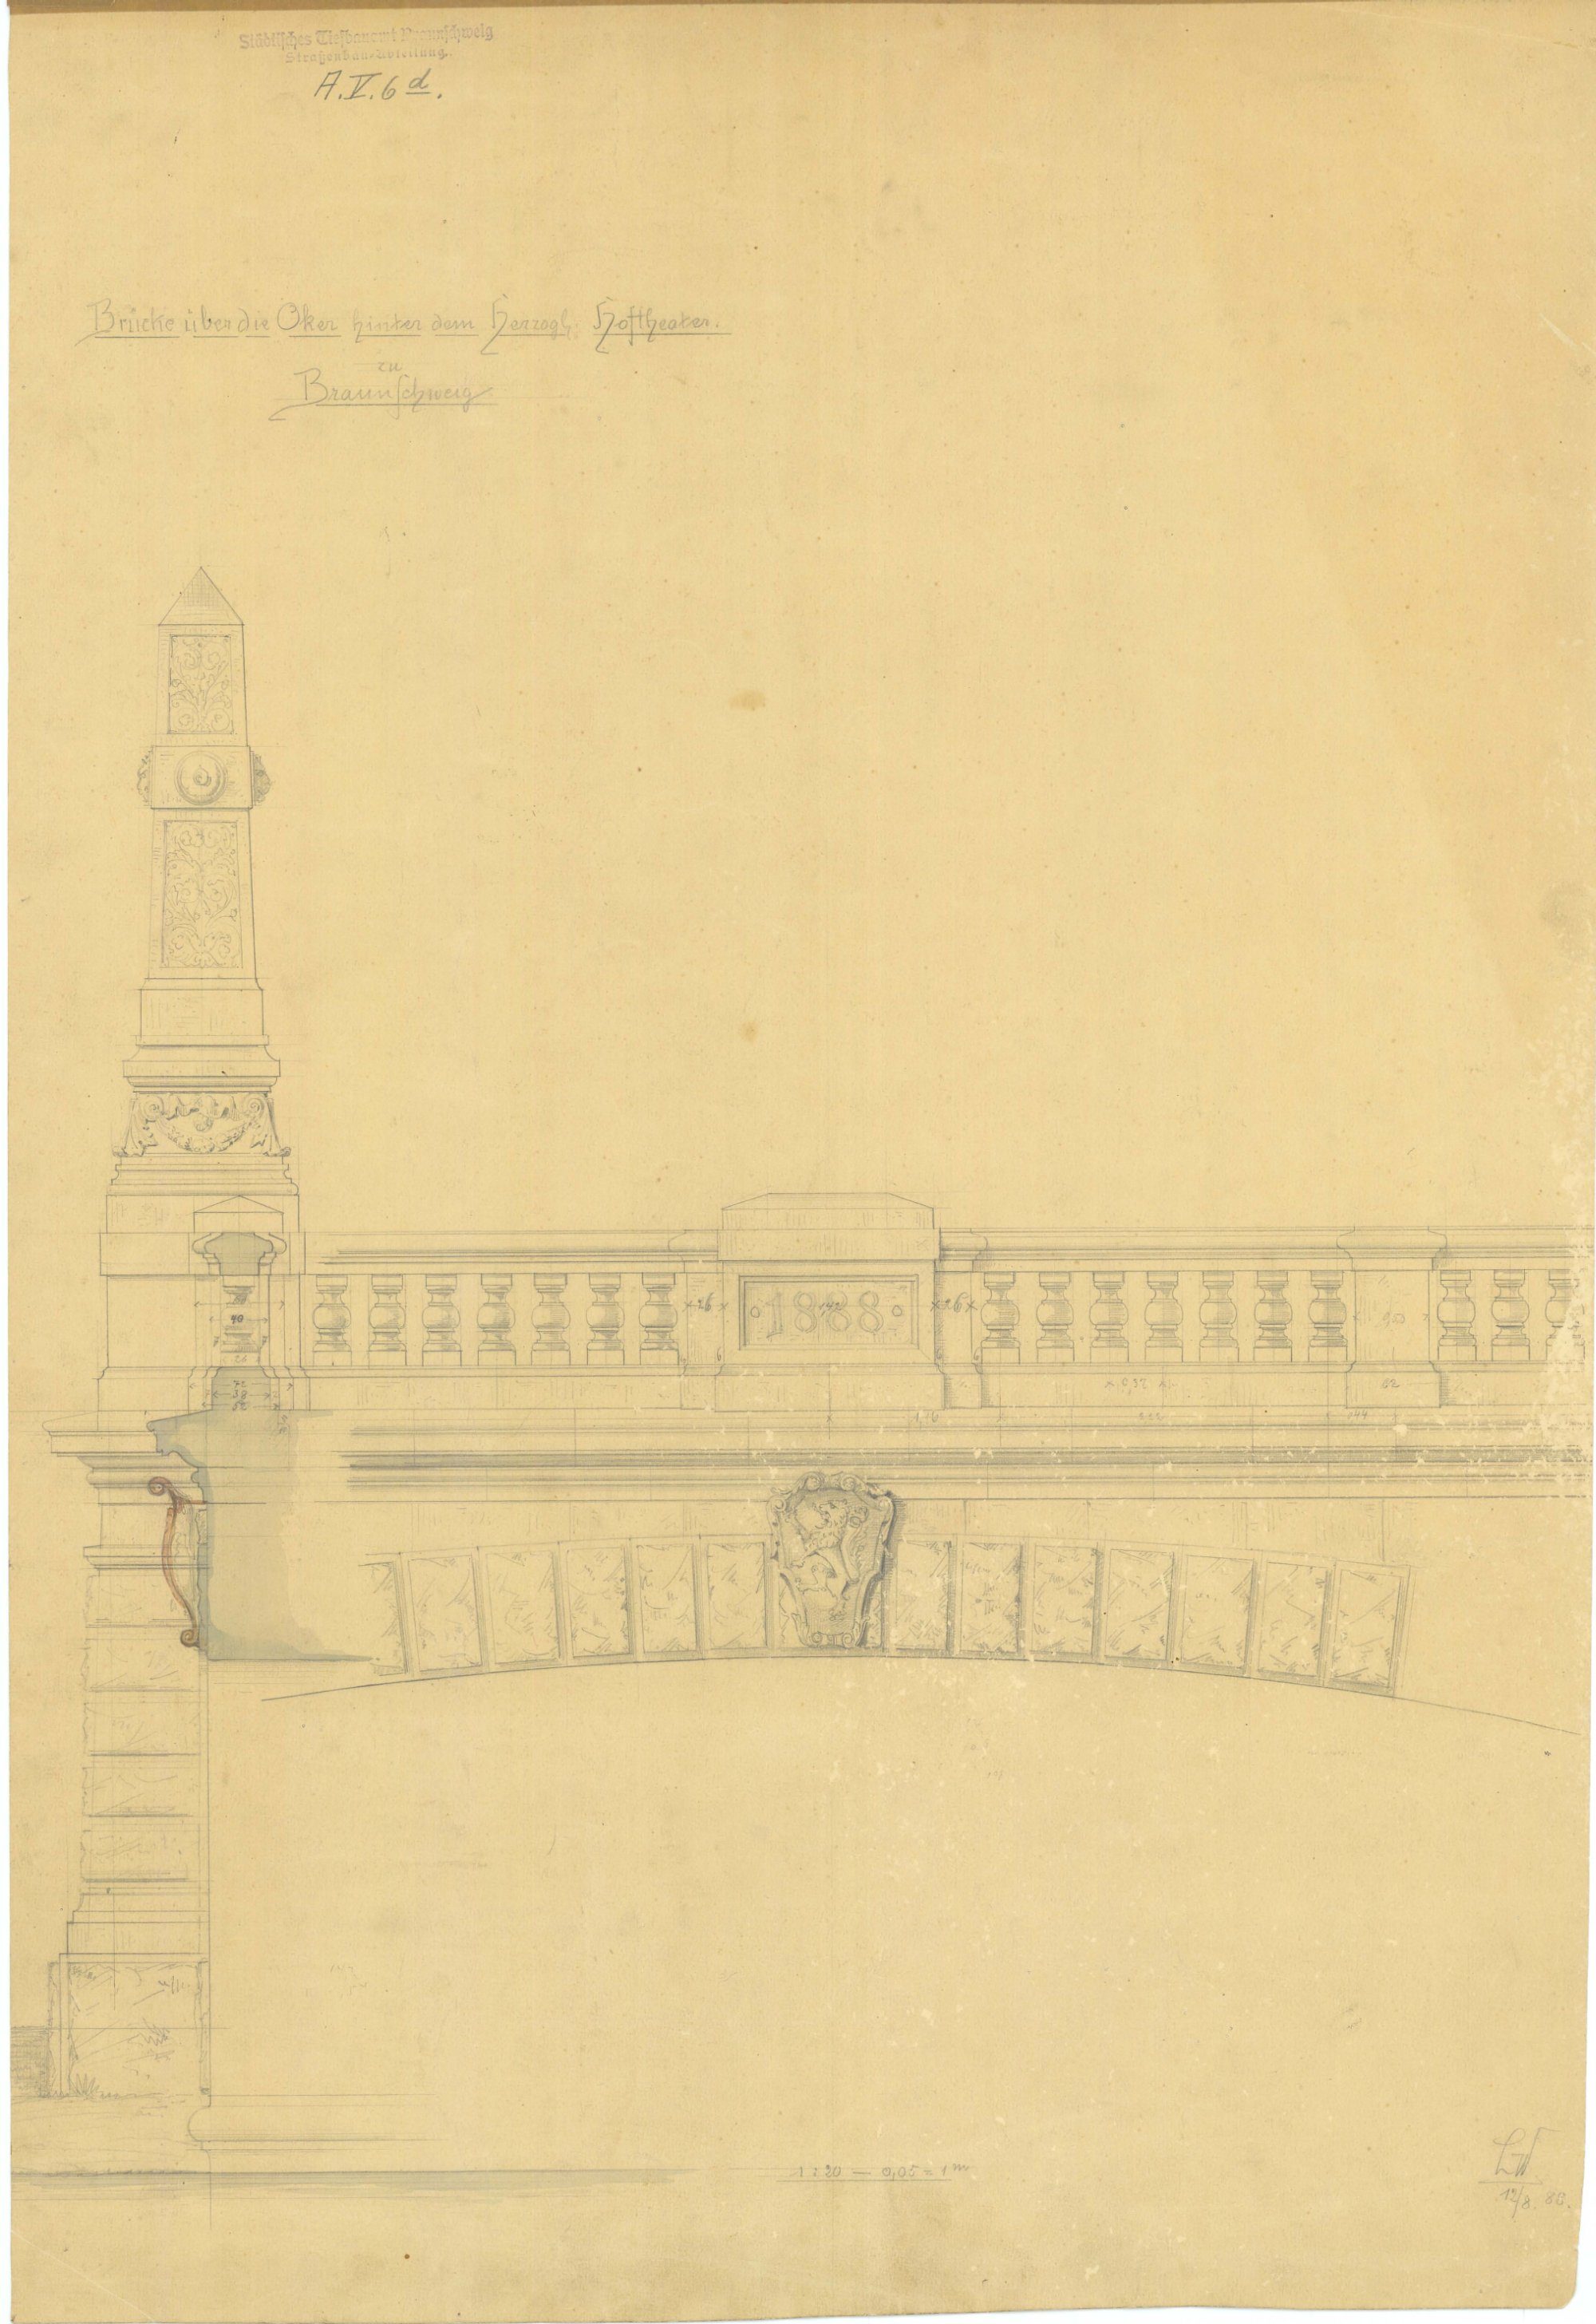 Theaterbrücke, Eckpostament der Brüstung, 1888